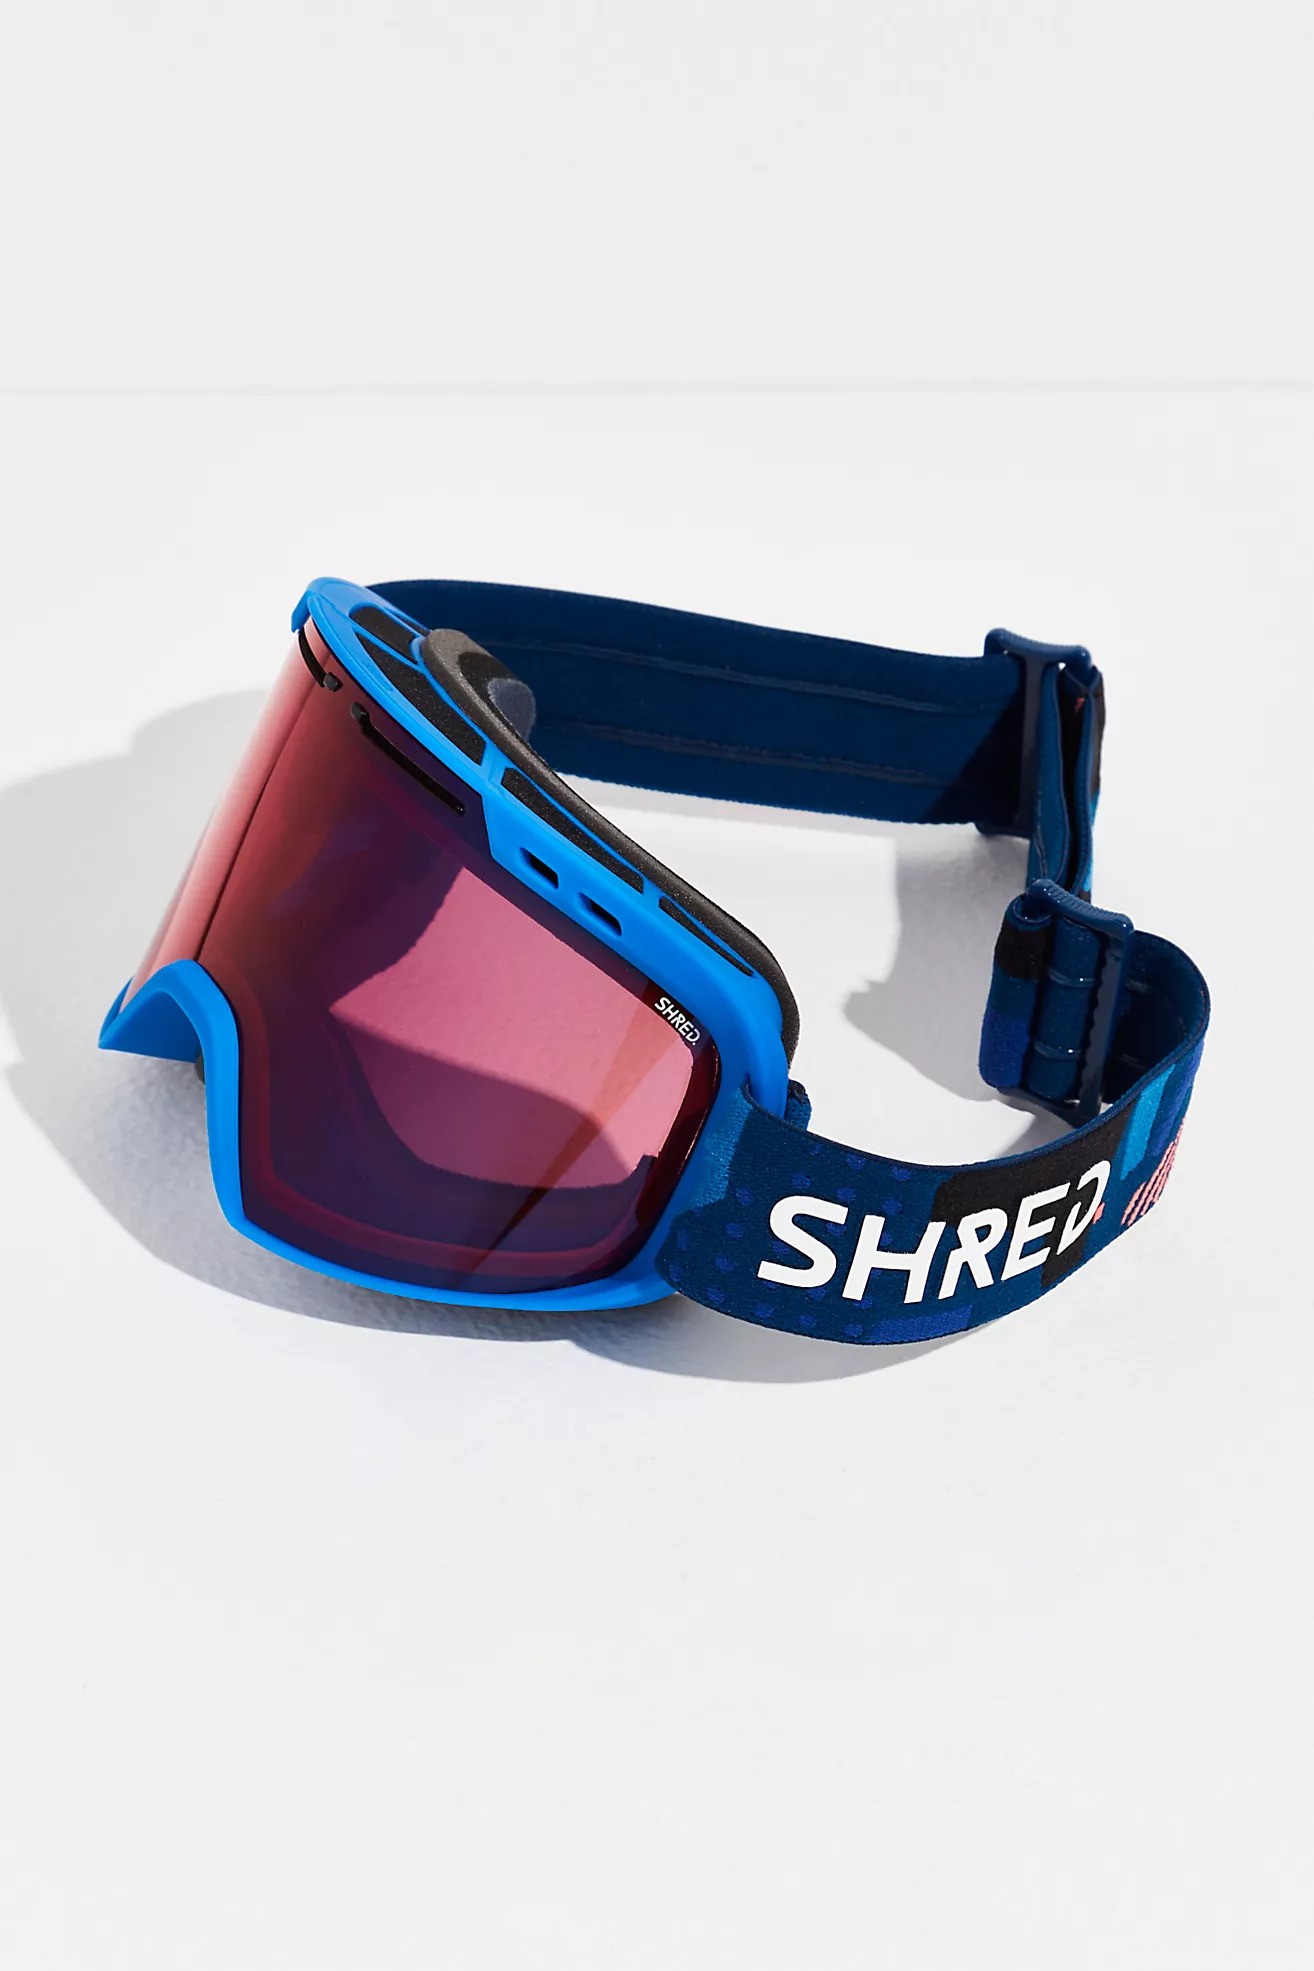 Shred + Amazify Ski Goggles